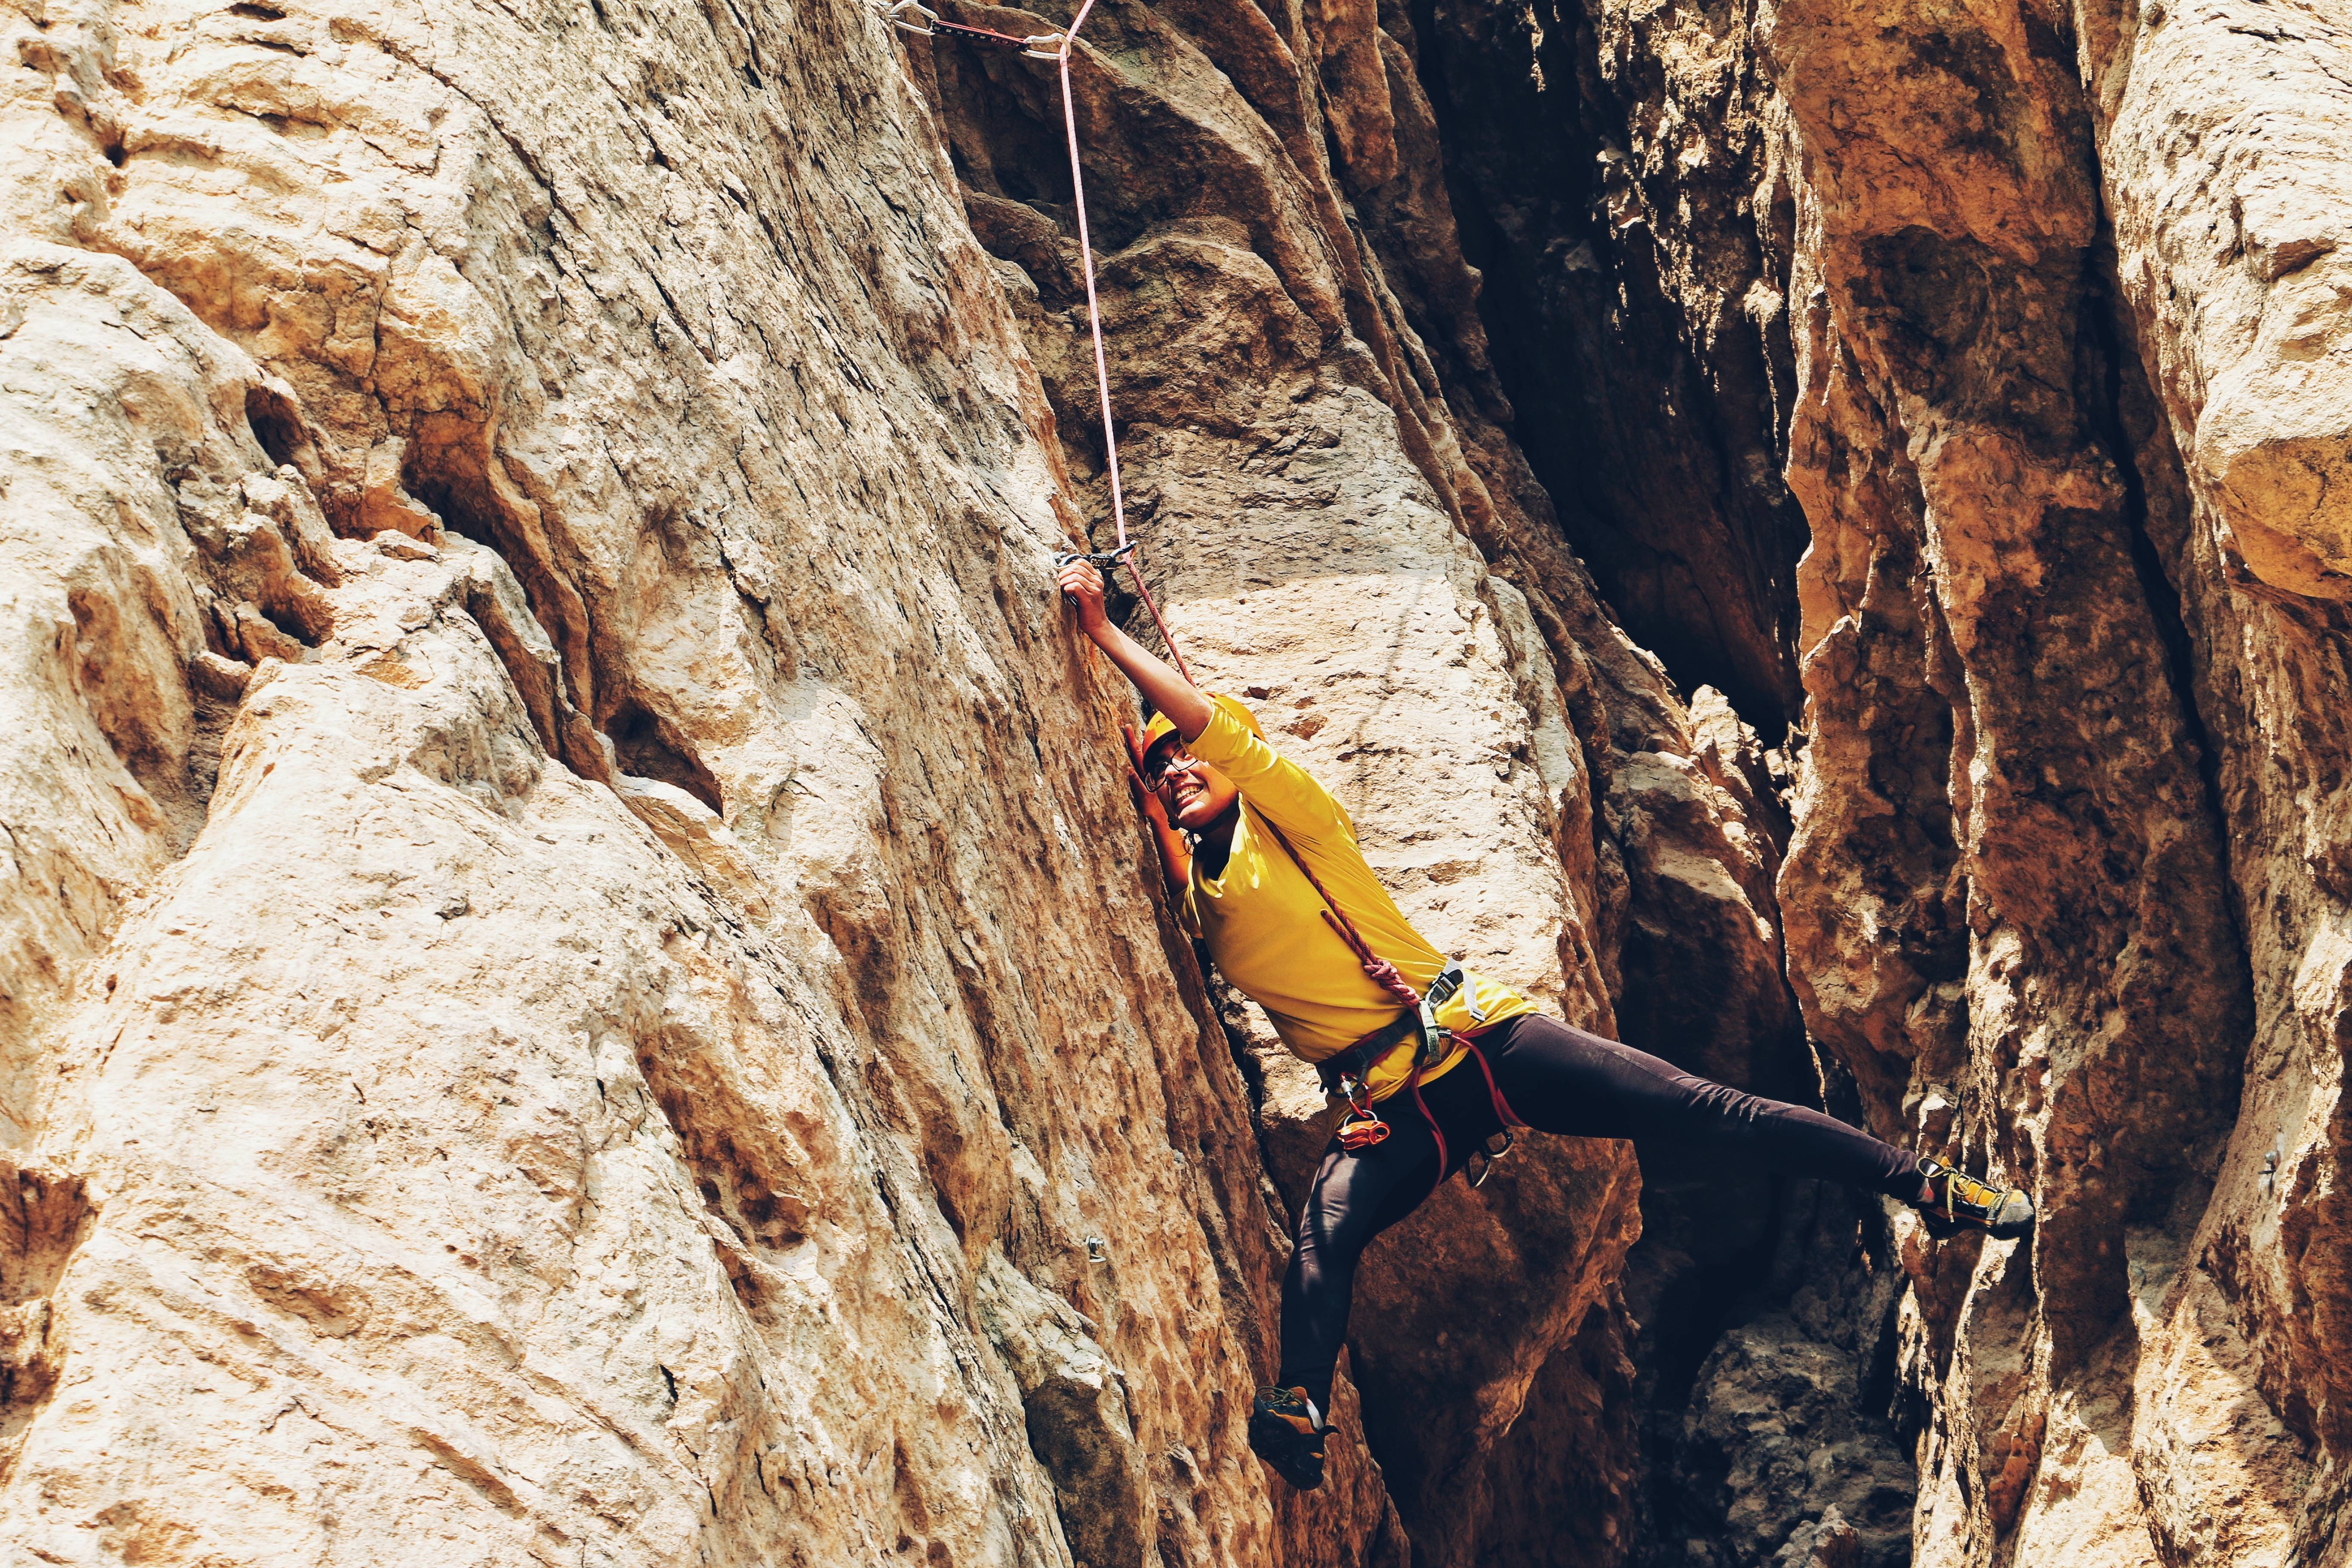 Climb now. Rock Climbing — скалолазание. Скалолазание по отвесной скале. Альпинизм вид спорта. Скальный альпинизм.